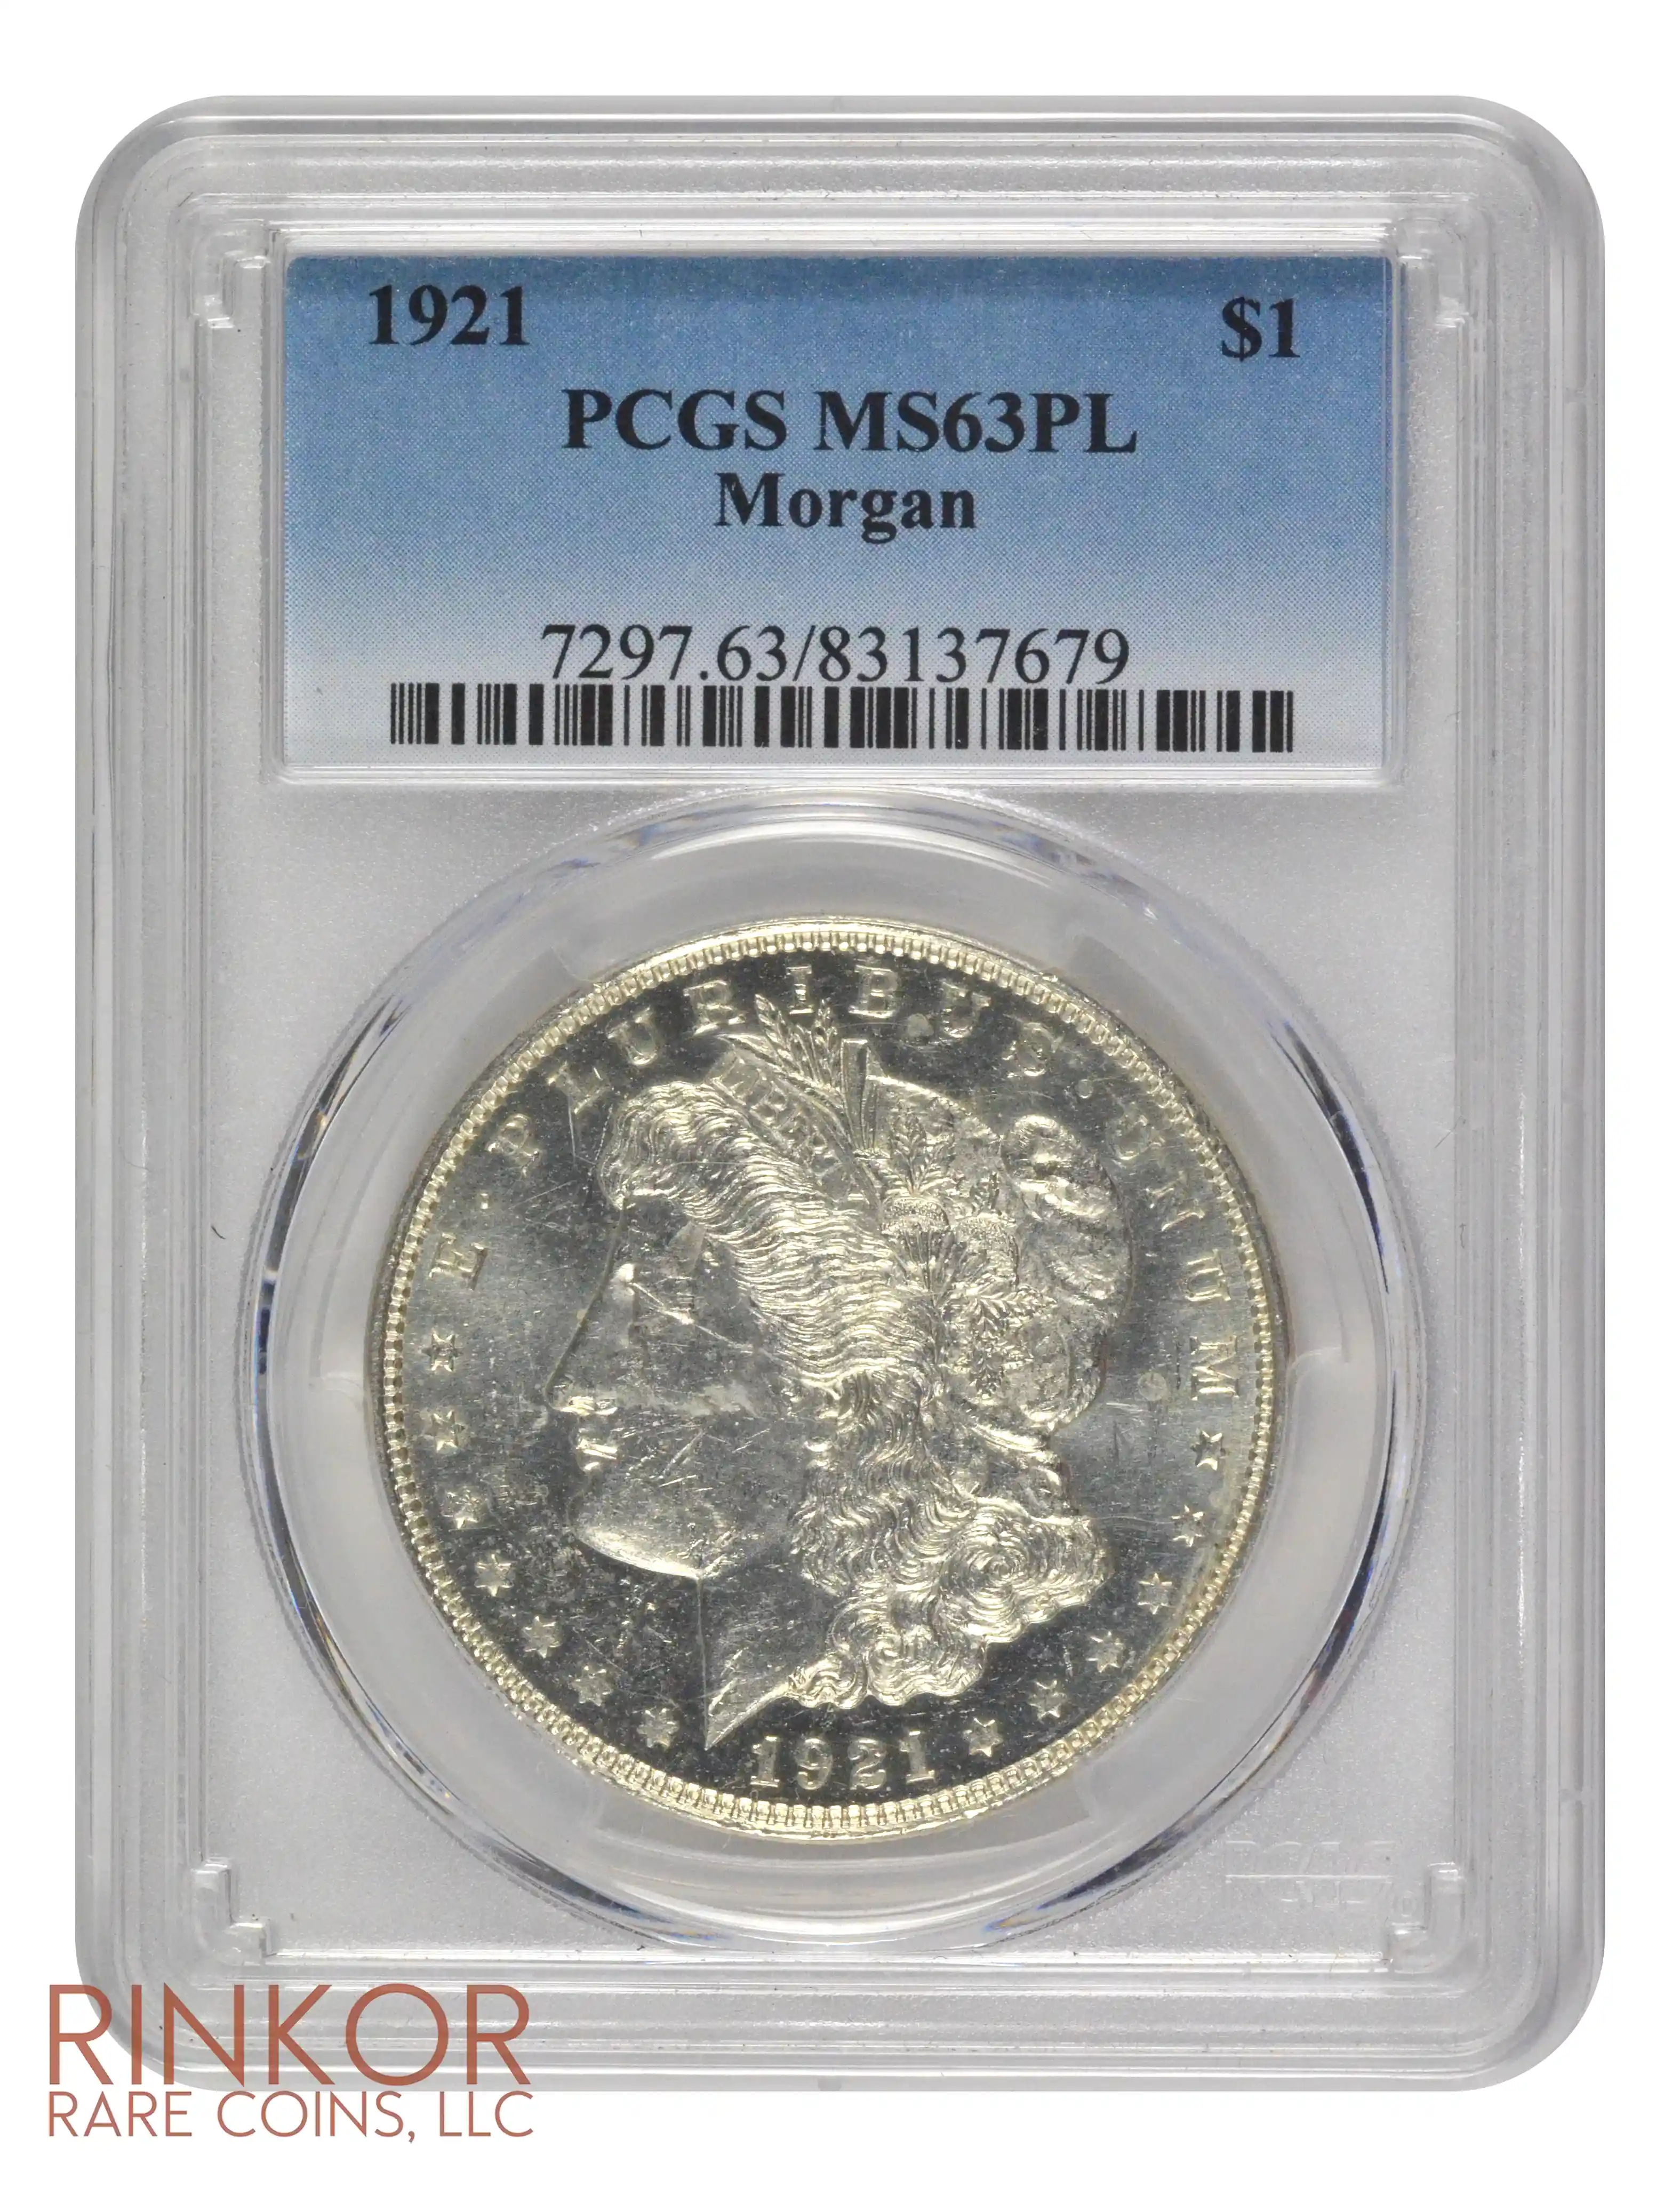 1921 Morgan $1 PCGS MS 63 PL